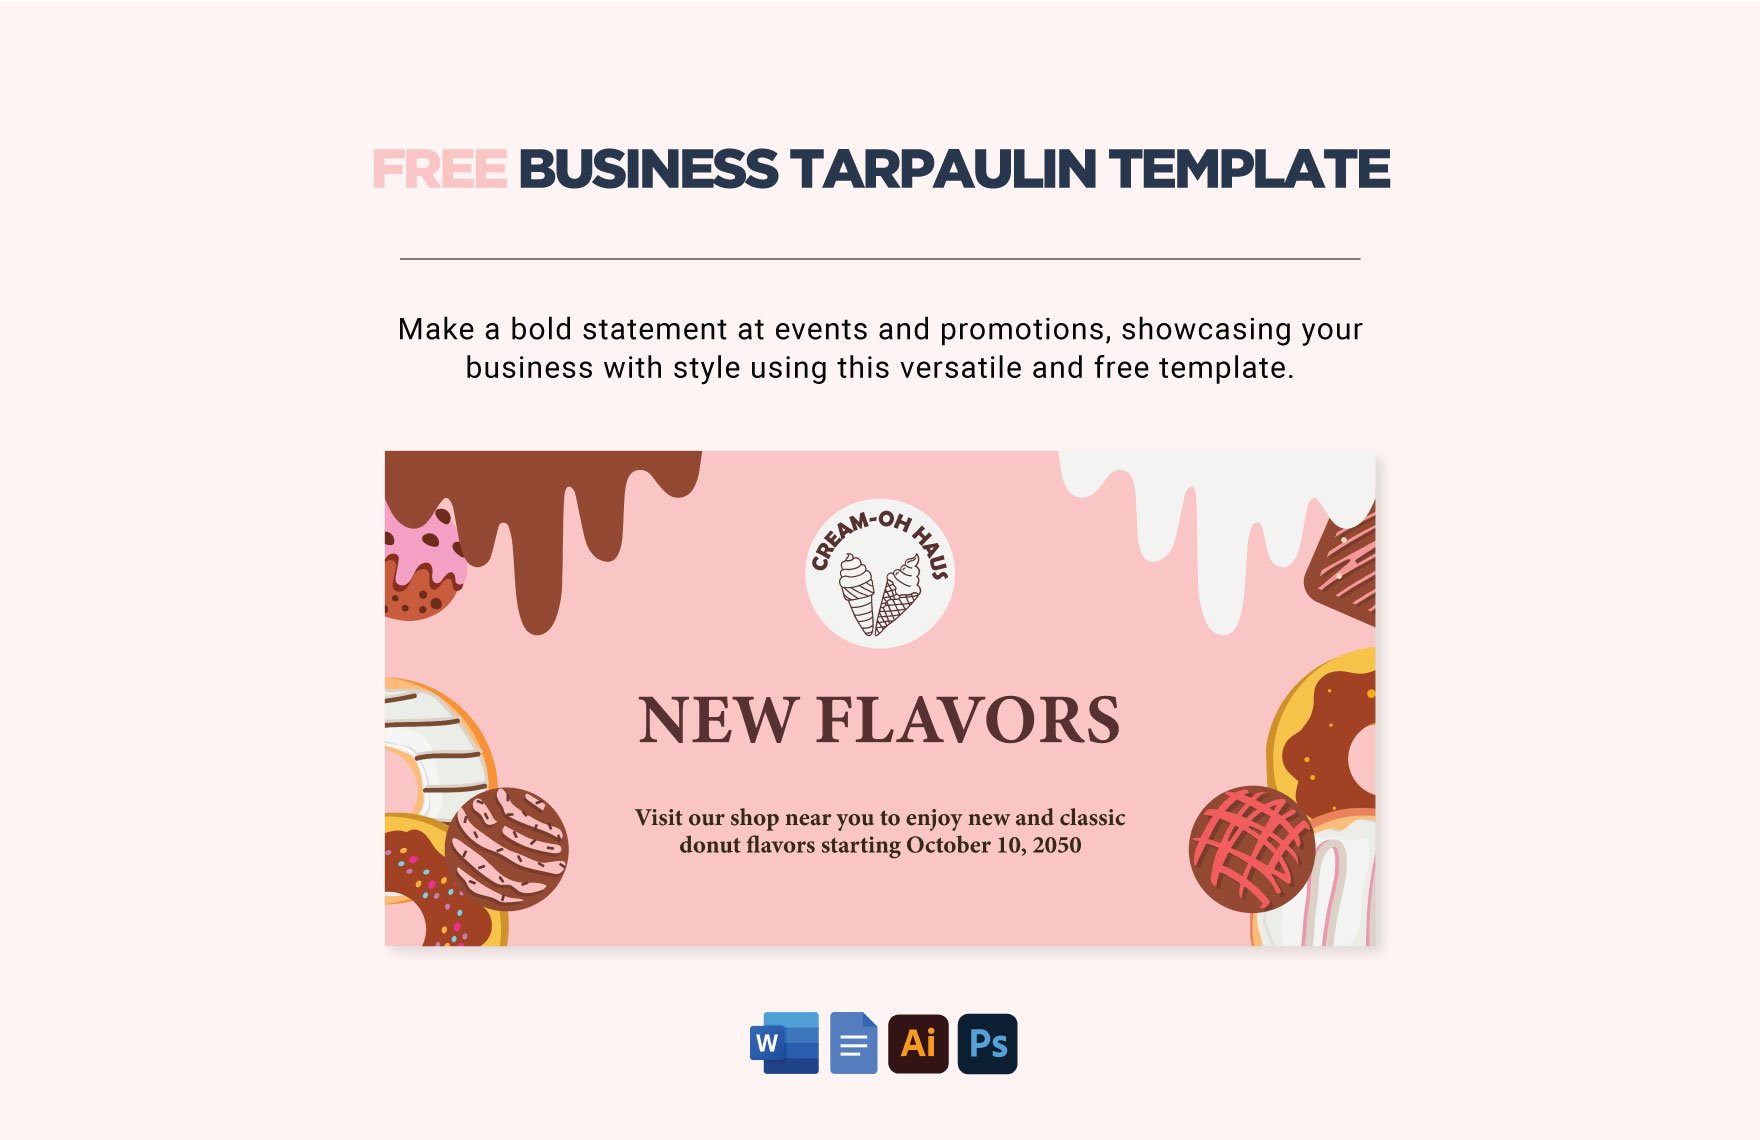 Free Business Tarpaulin Template in Word, Google Docs, Illustrator, PSD